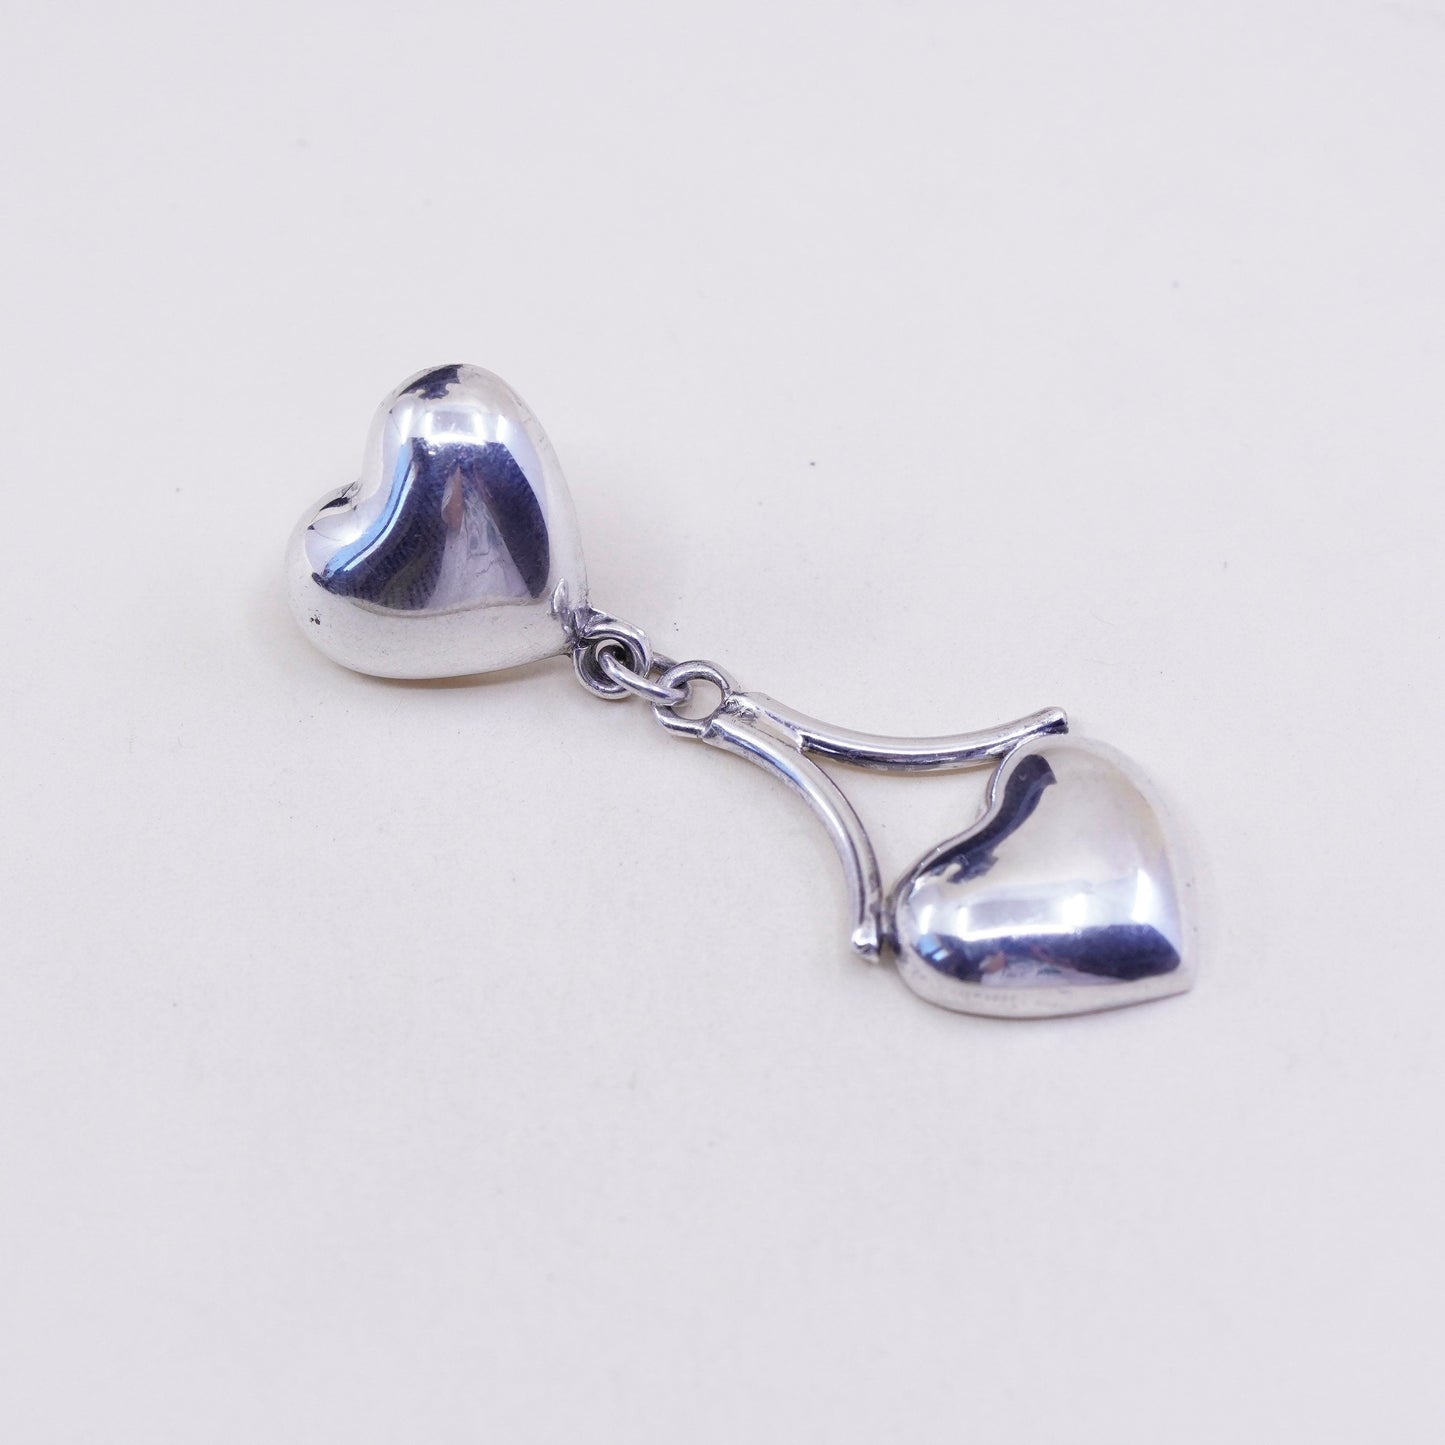 Vintage Sterling 925 silver handmade earrings with heart drops